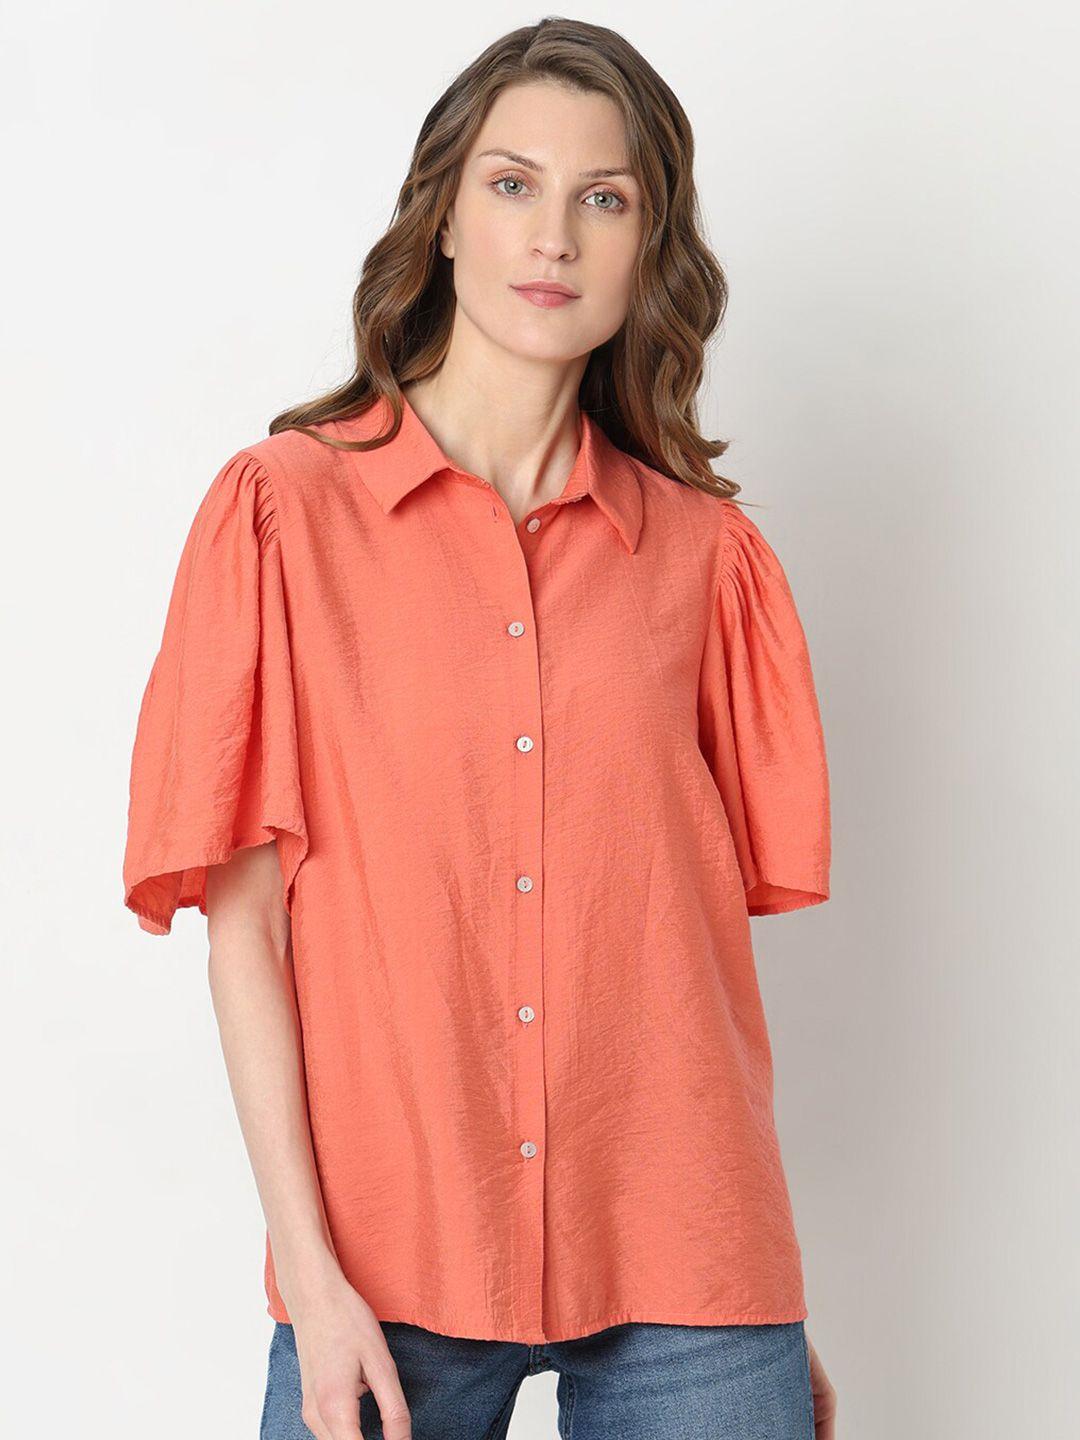 vero-moda-women-orange-casual-shirt